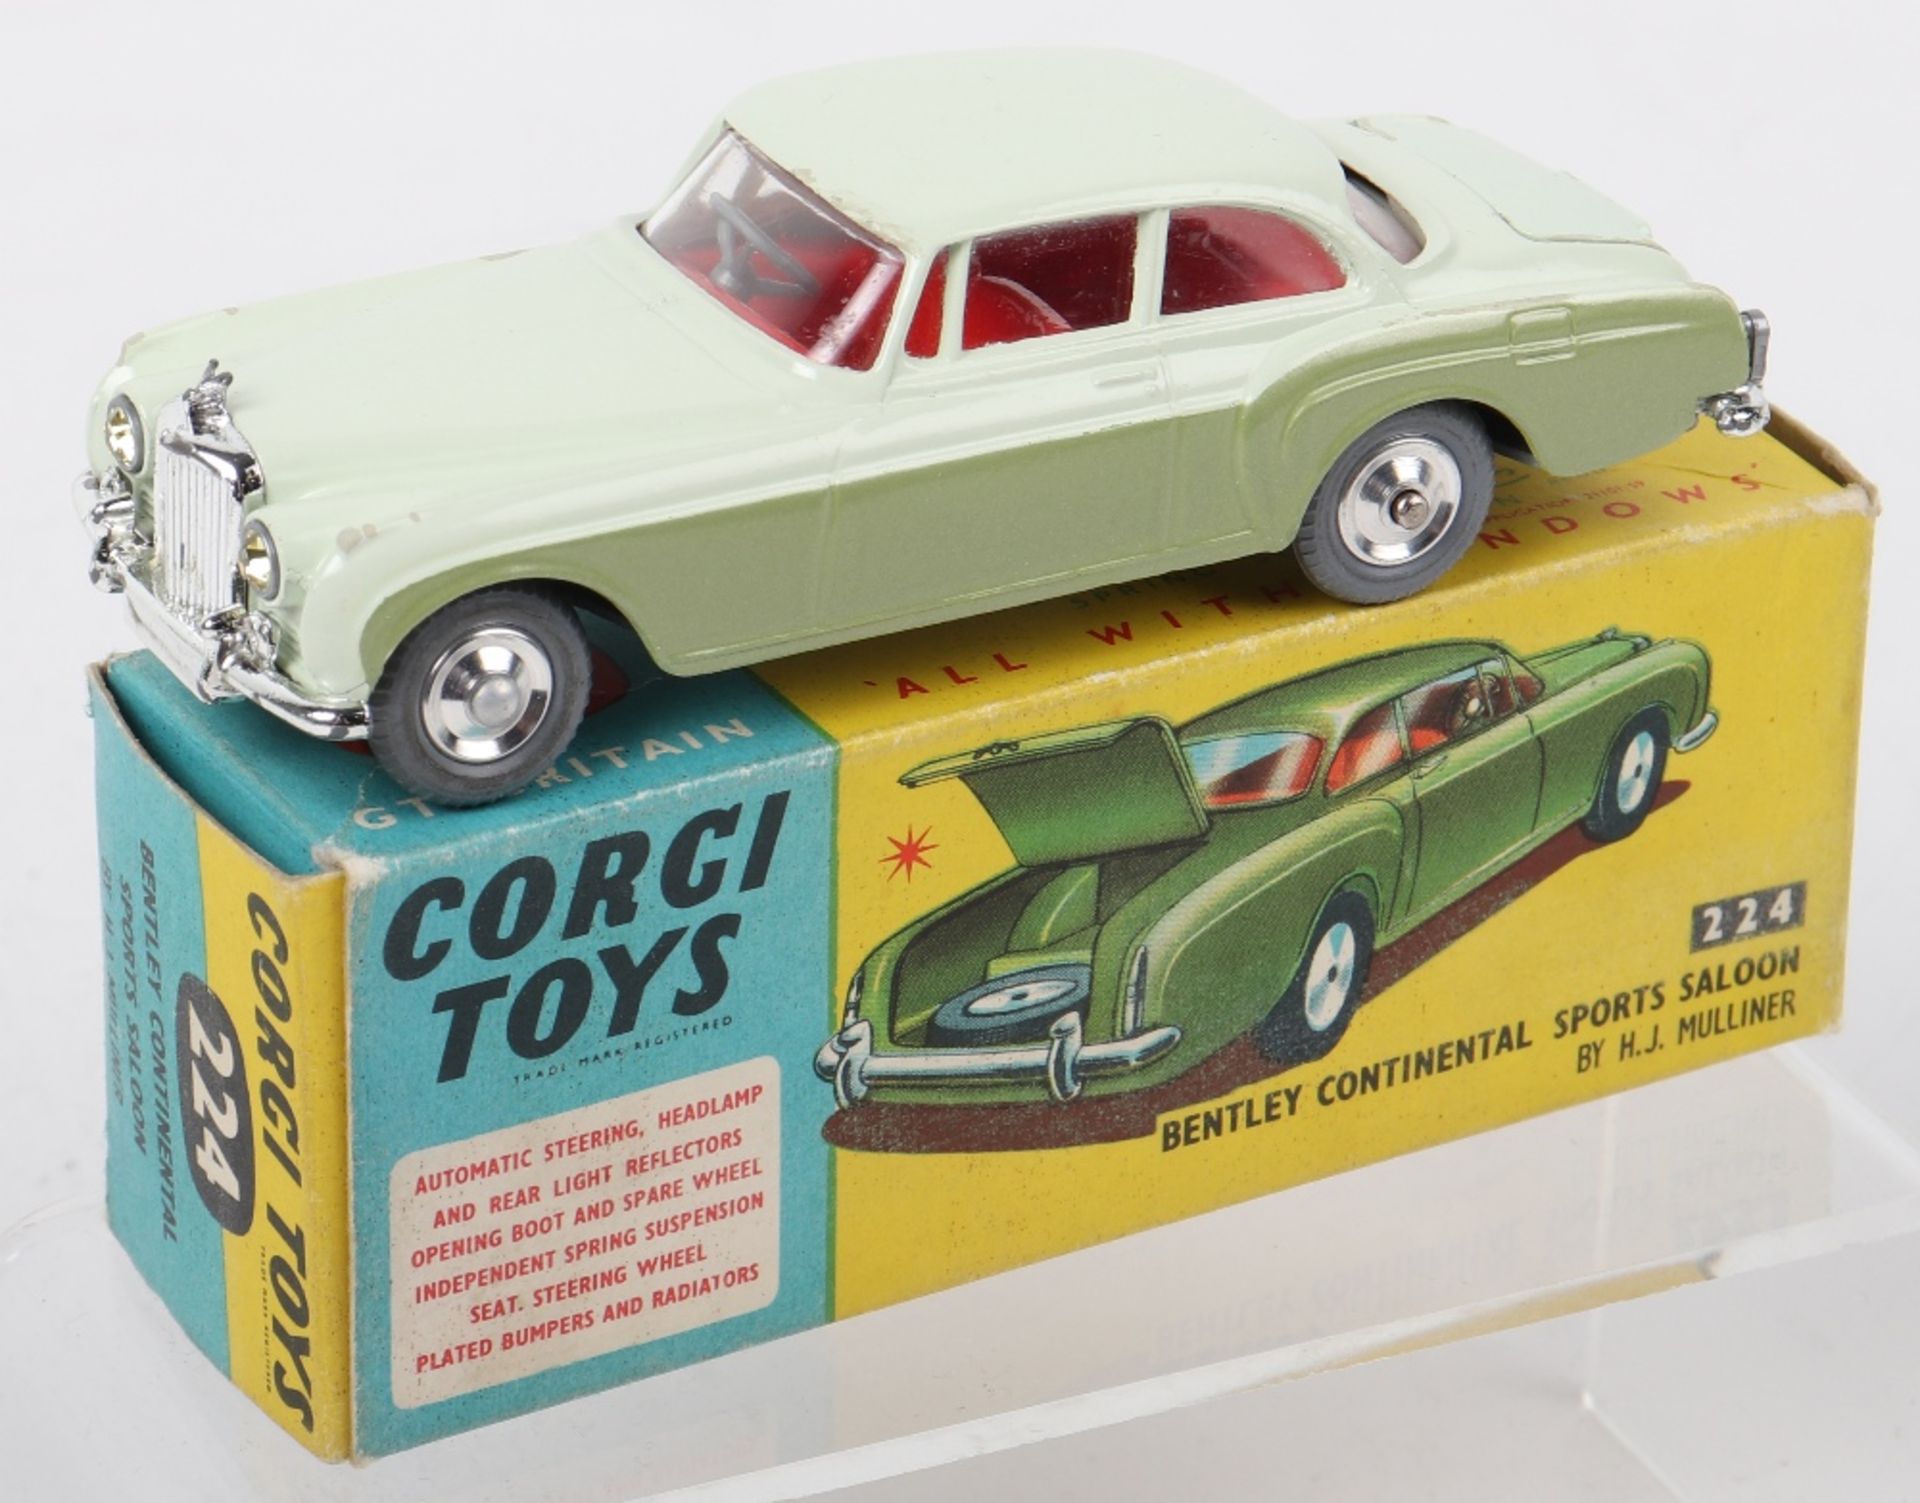 Corgi Toys 224 Bentley Continental Sports Saloon